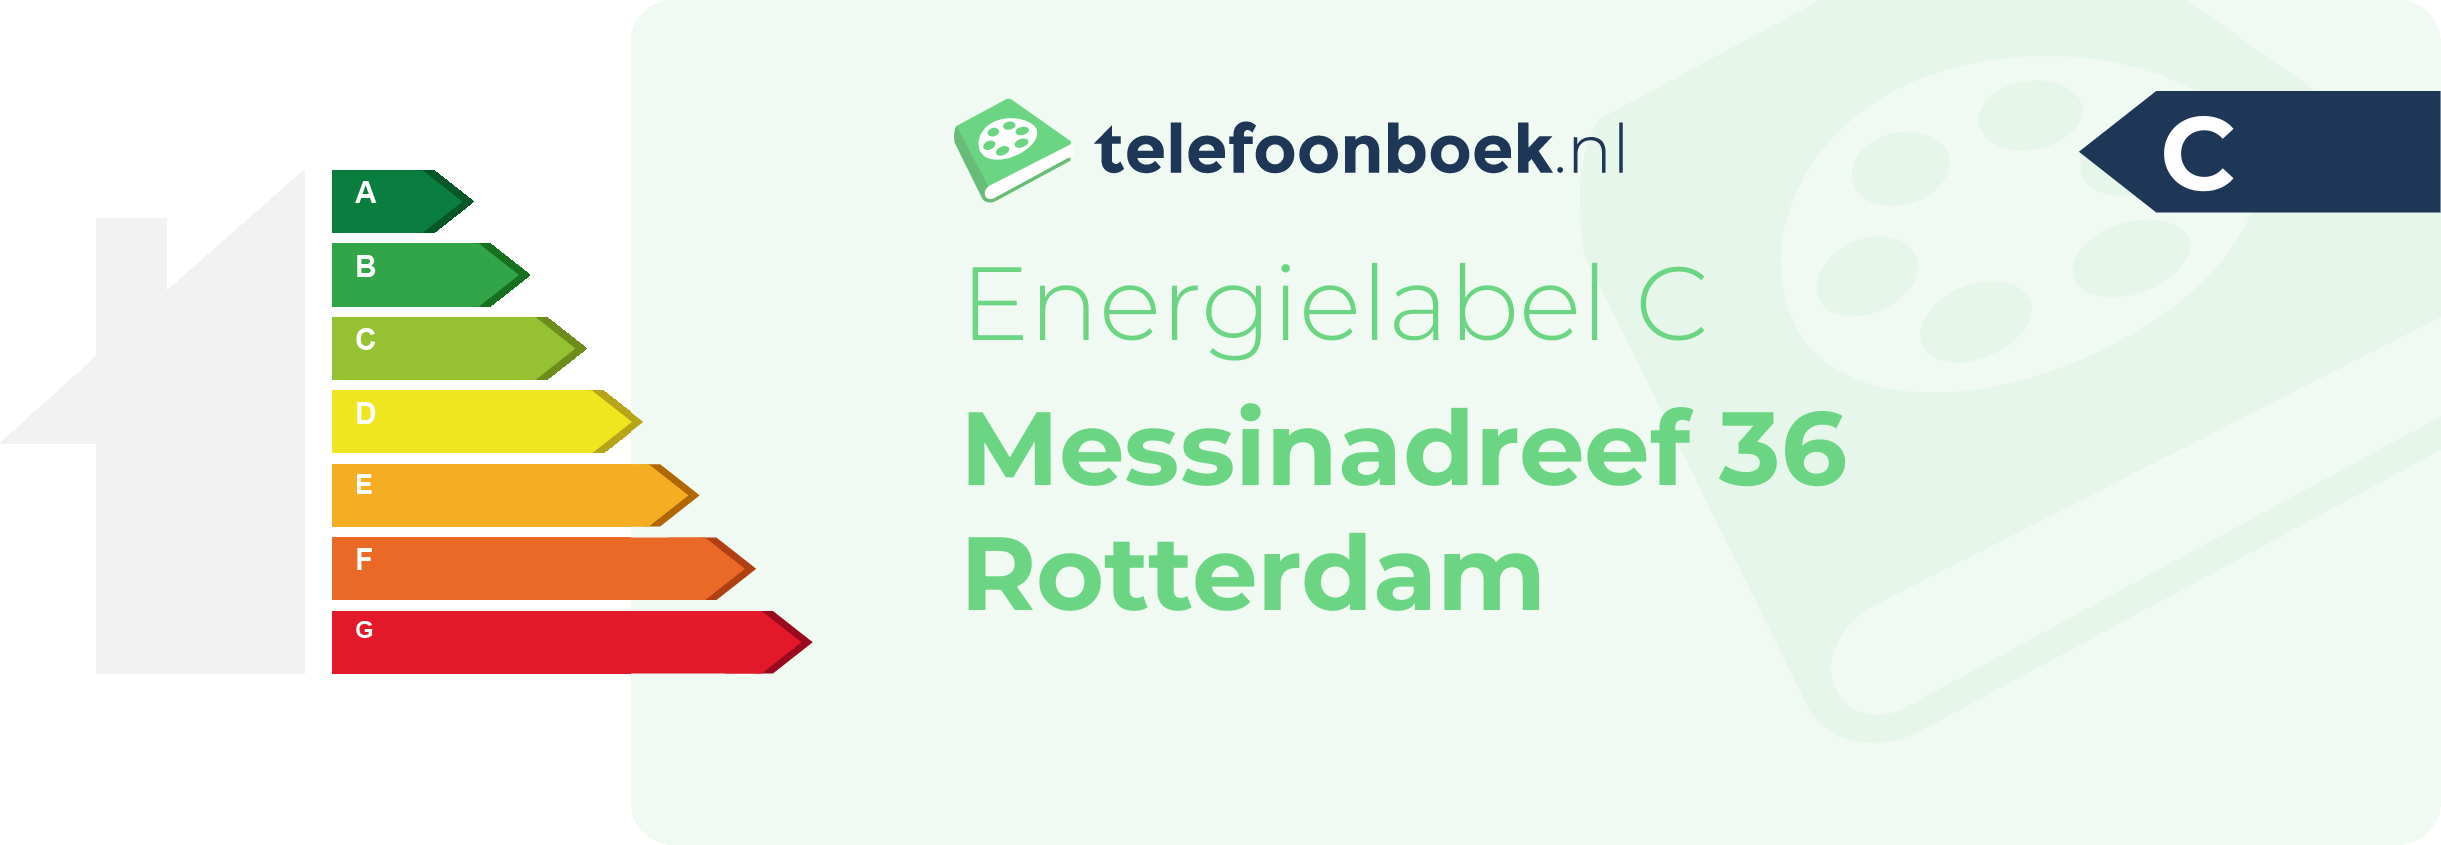 Energielabel Messinadreef 36 Rotterdam